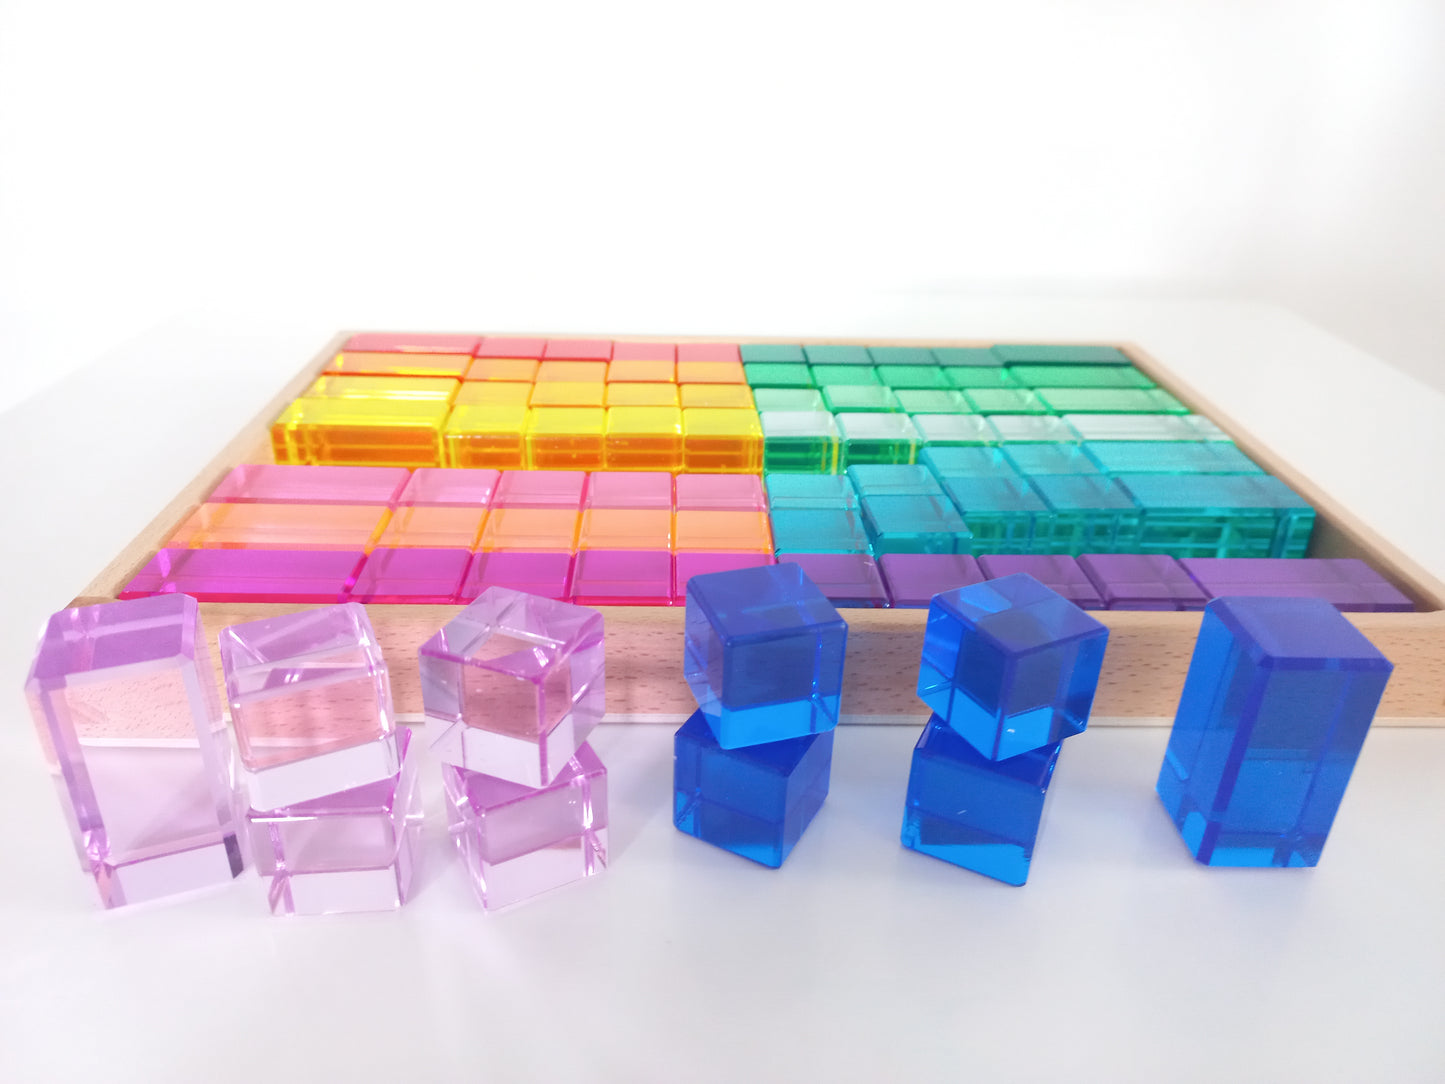 Acrylic Mixed Block Set - Multicolour